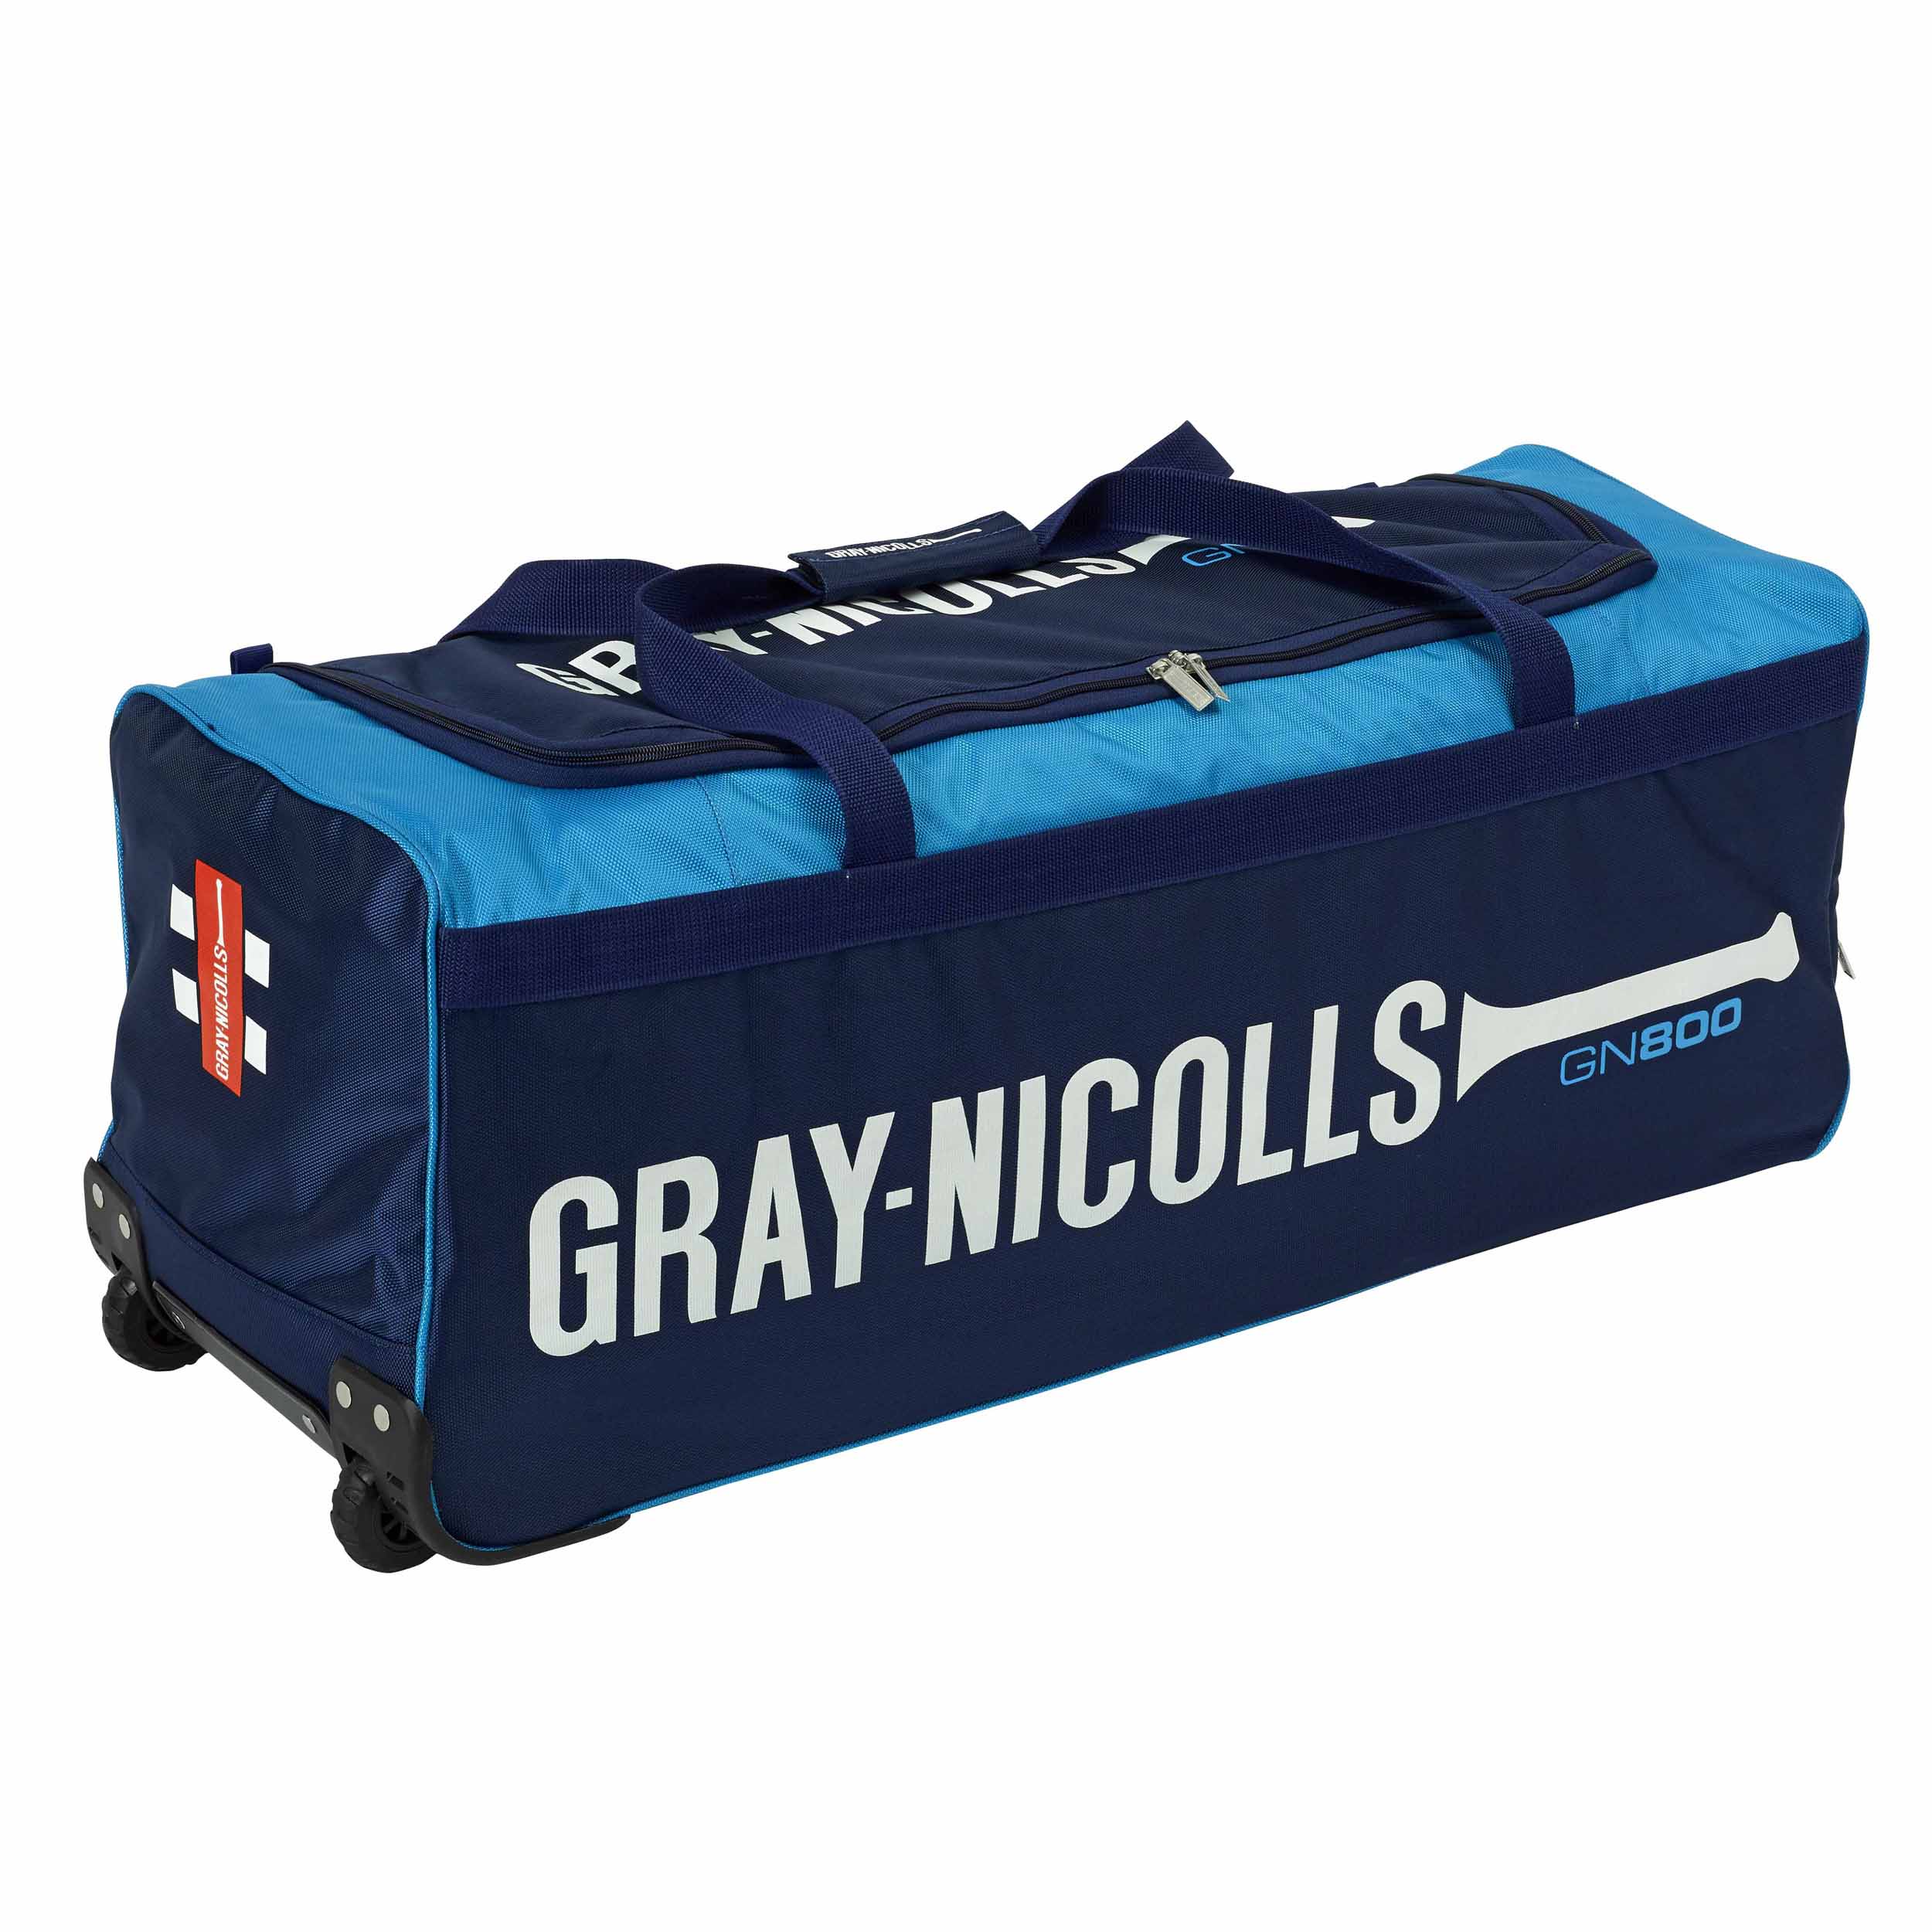 Gray Nicolls GN800 Wheel Bag – Blue 21618